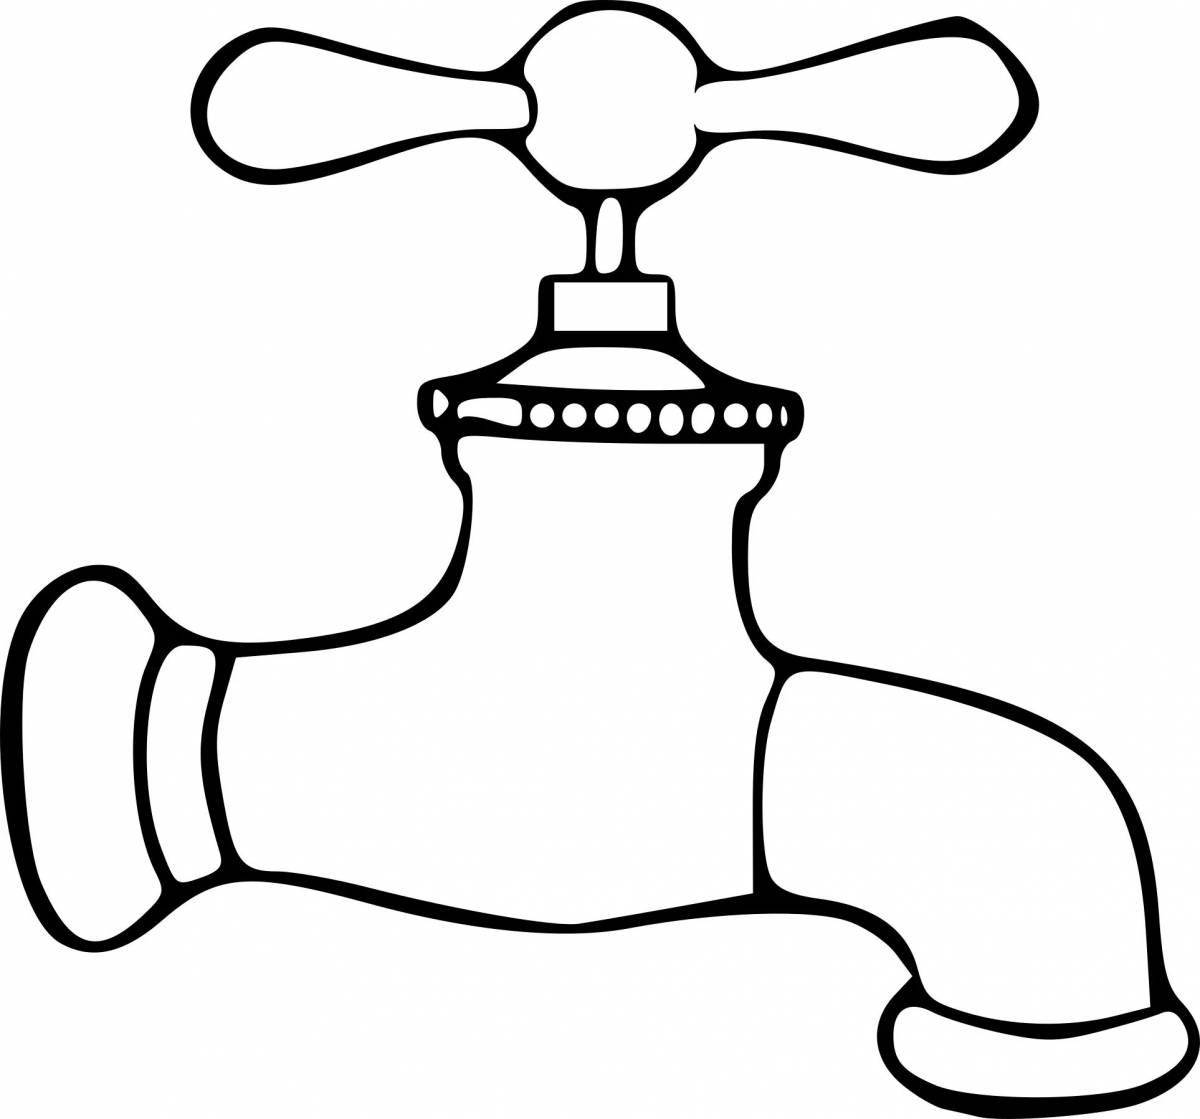 Water faucet #6